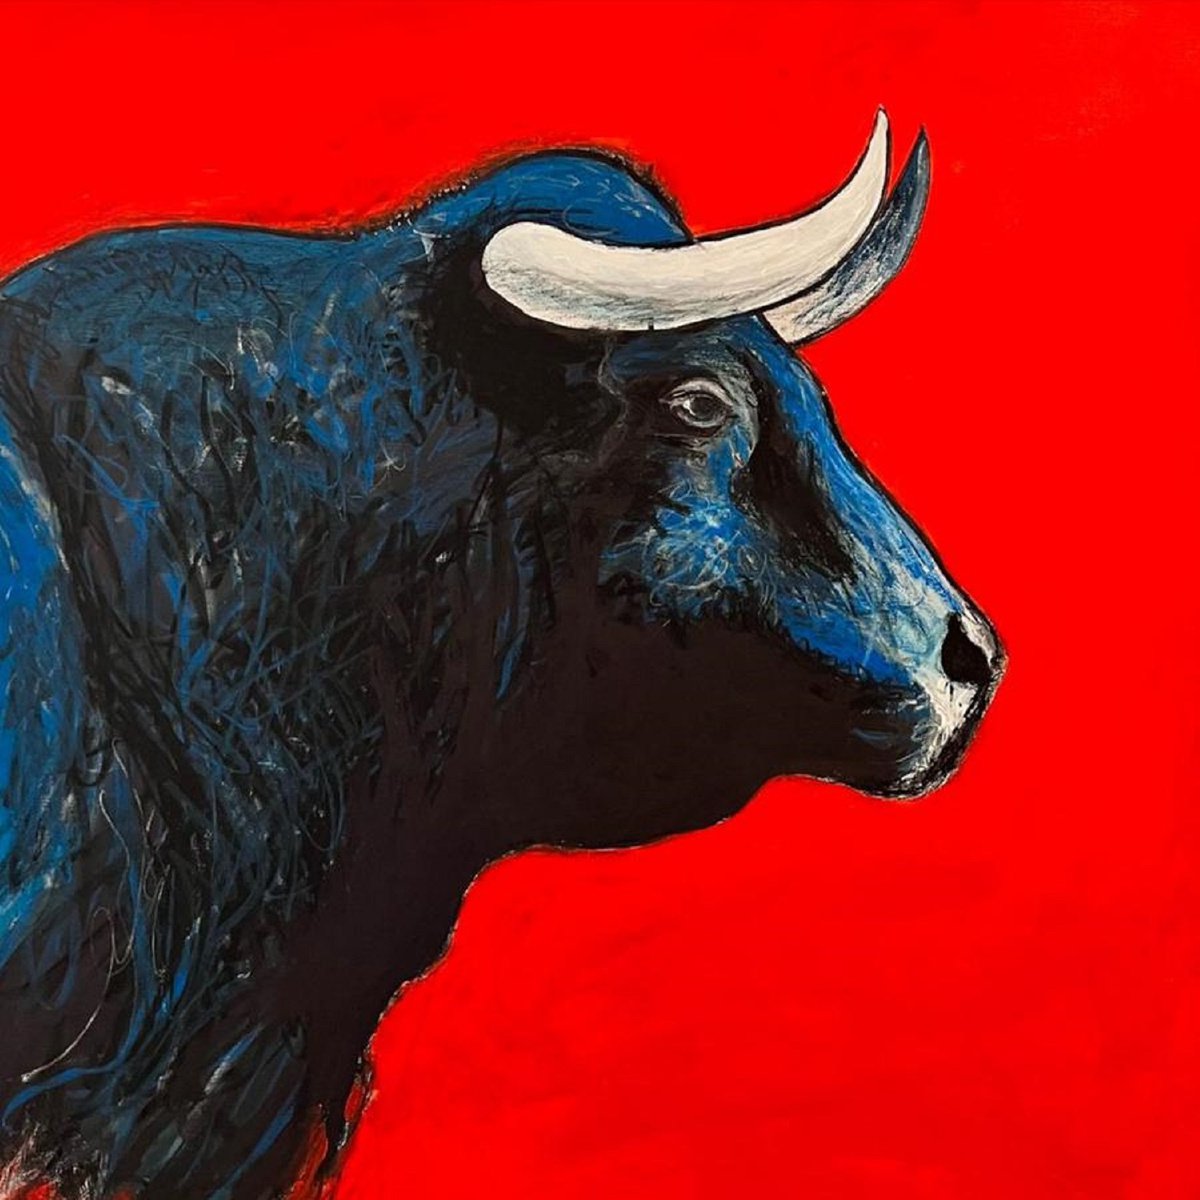 Blue Bull Head 2 - Red by Shabs Beigh